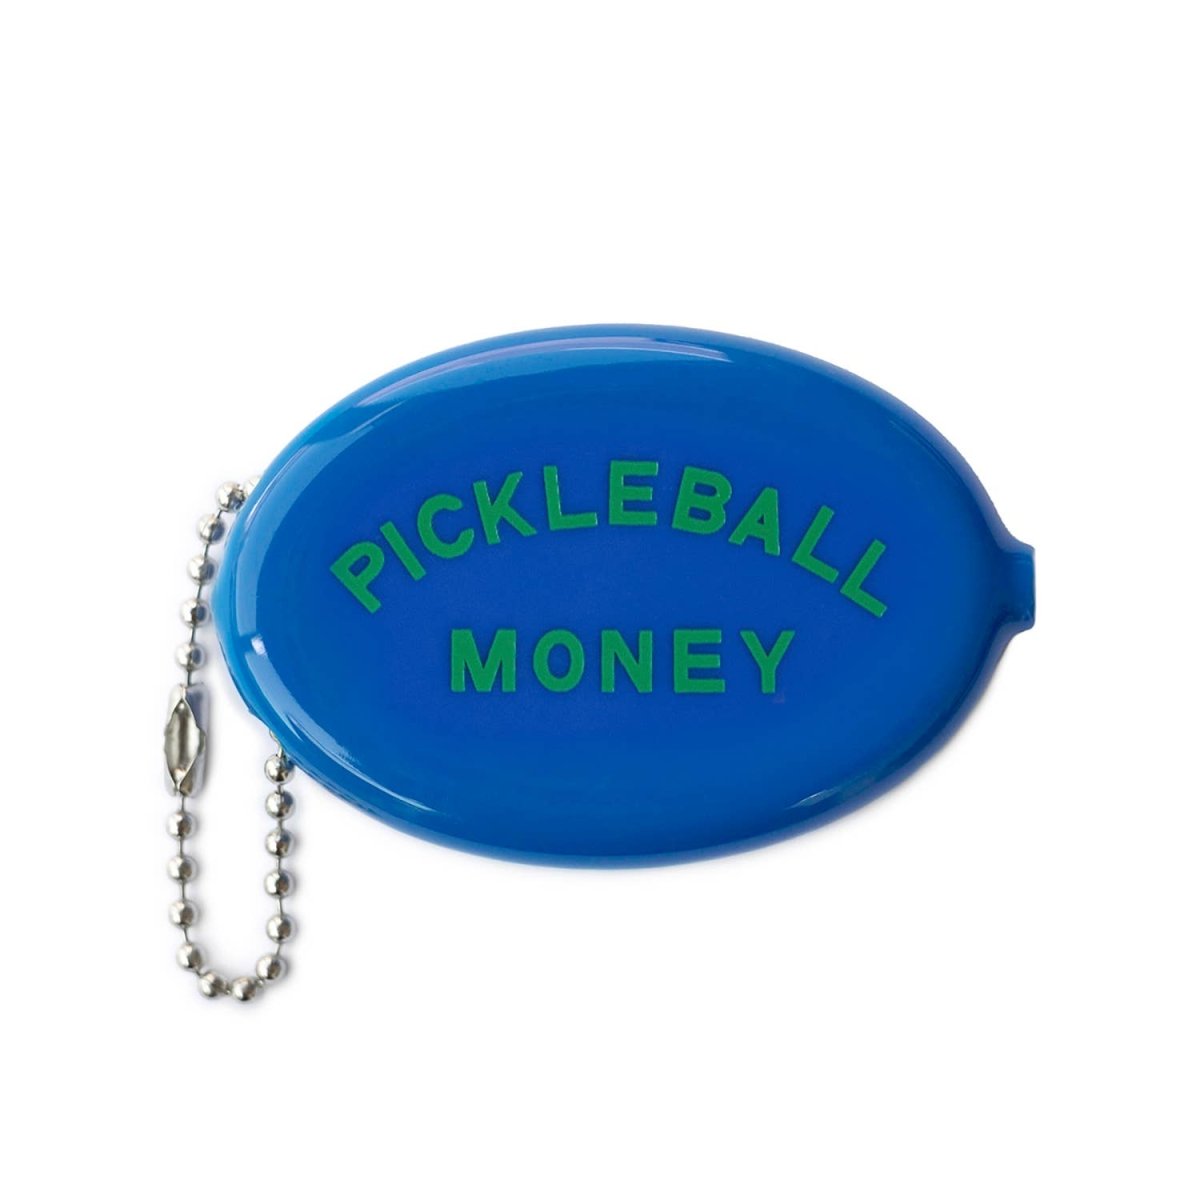 Pickleball Money Coin Pouch - The Boho Depot